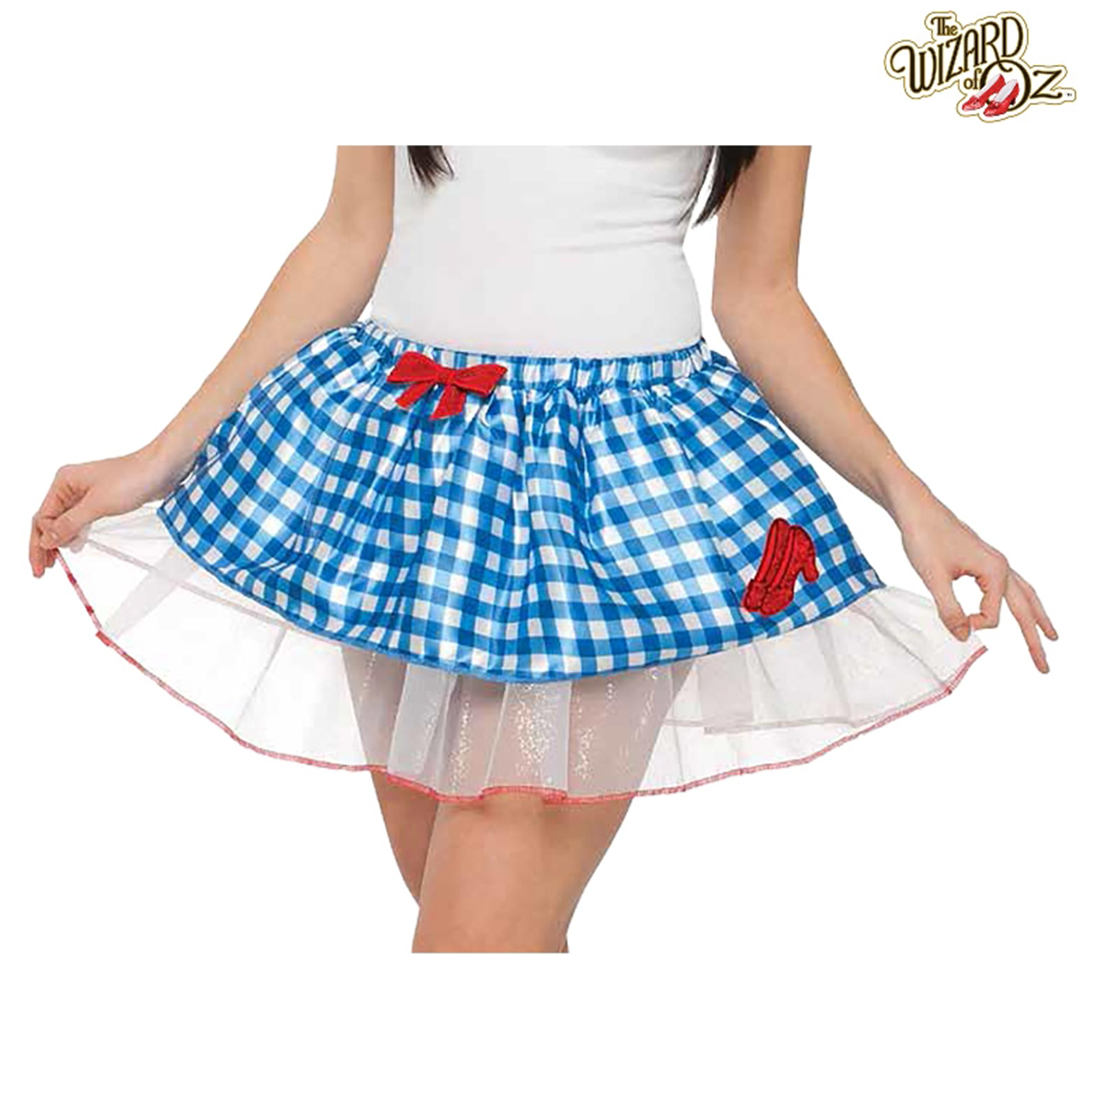 Dorothy Wizard of Oz Tutu Skirt